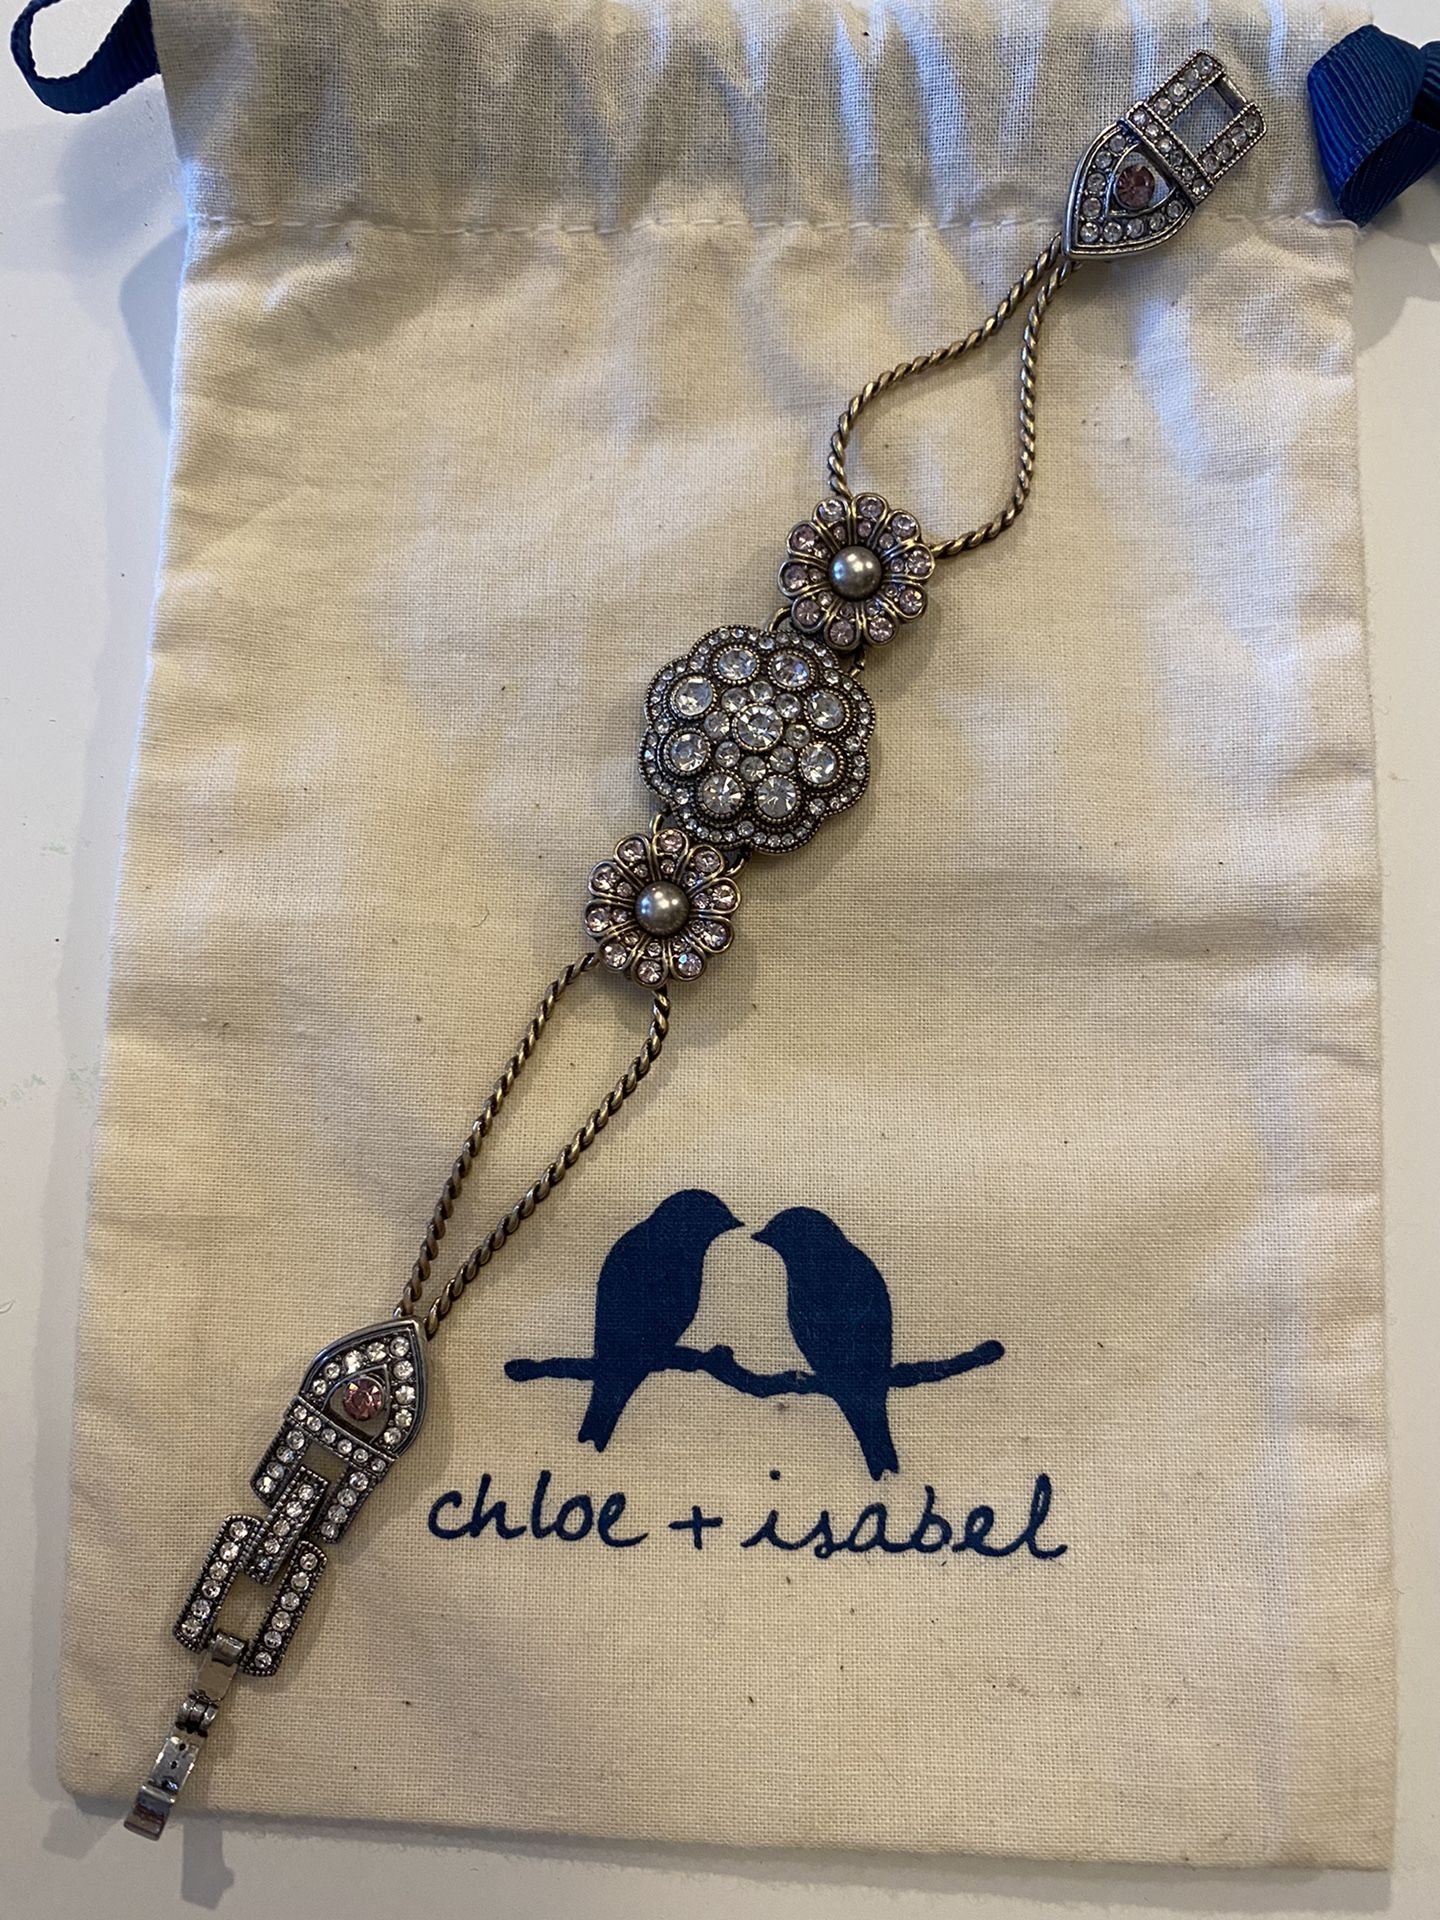 Bracelet (Chloe & Isabel brand)